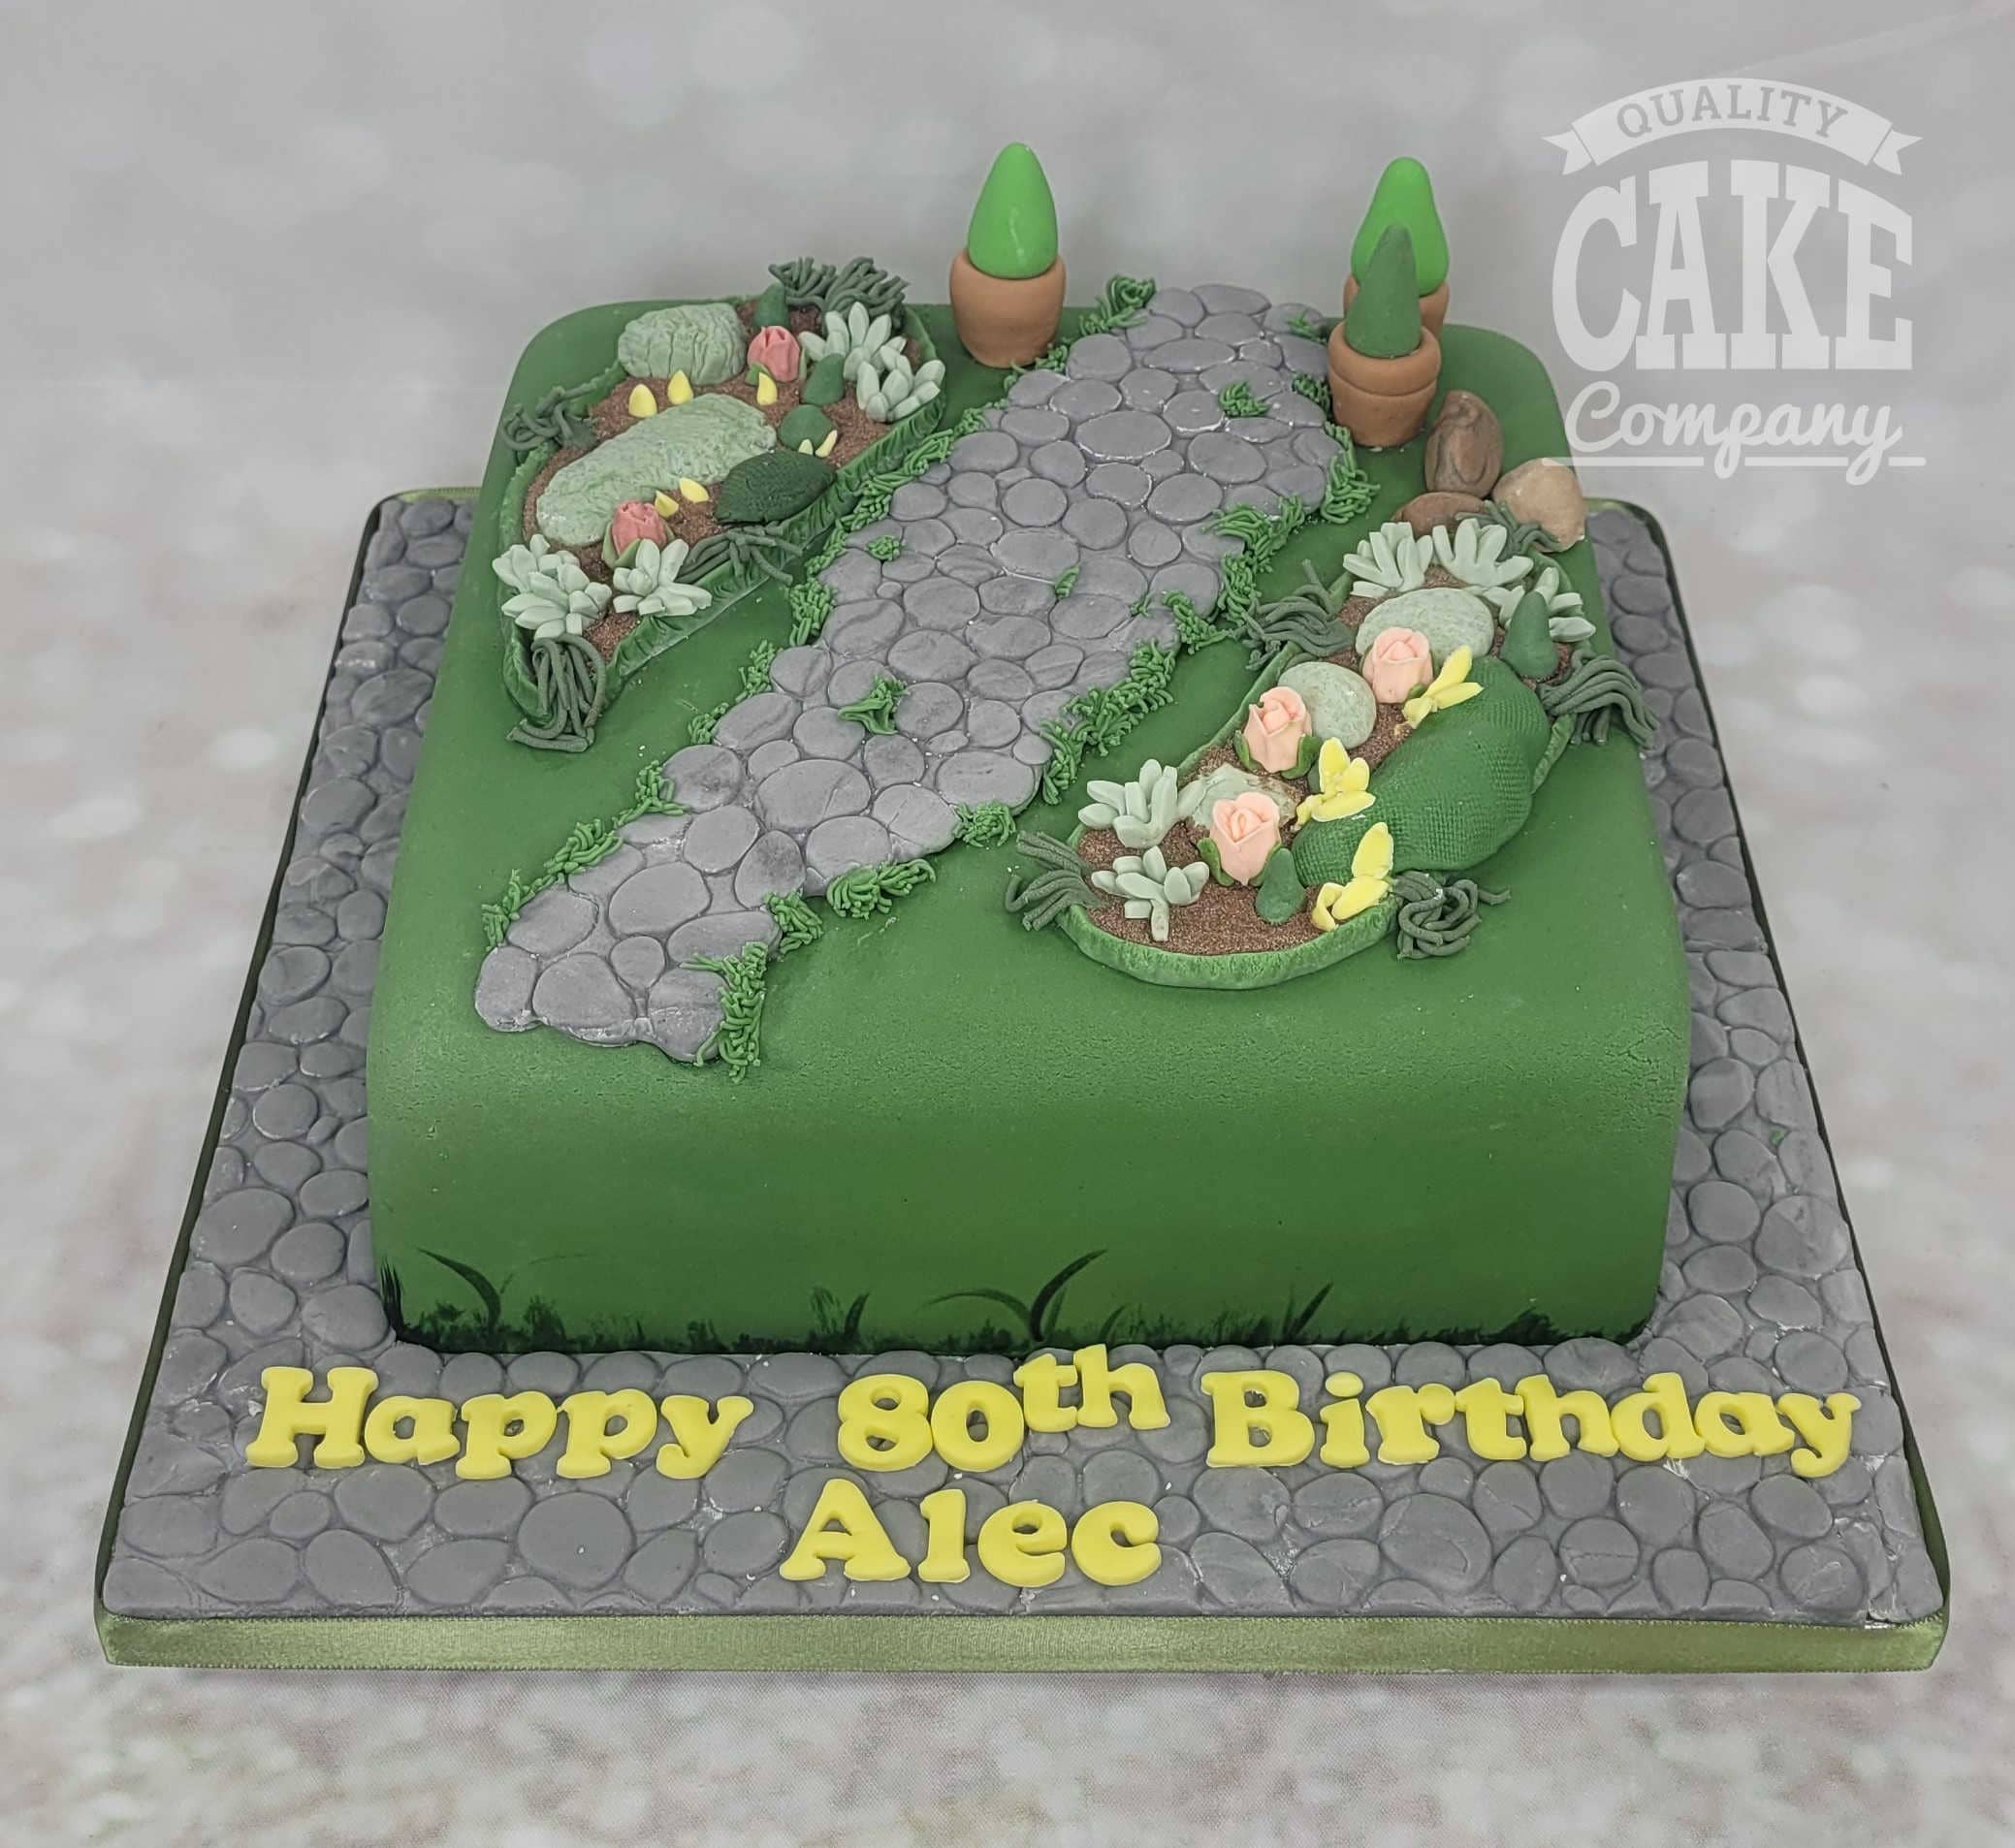 Hobby Theme Cakes - Quality Cake Company Tamworth